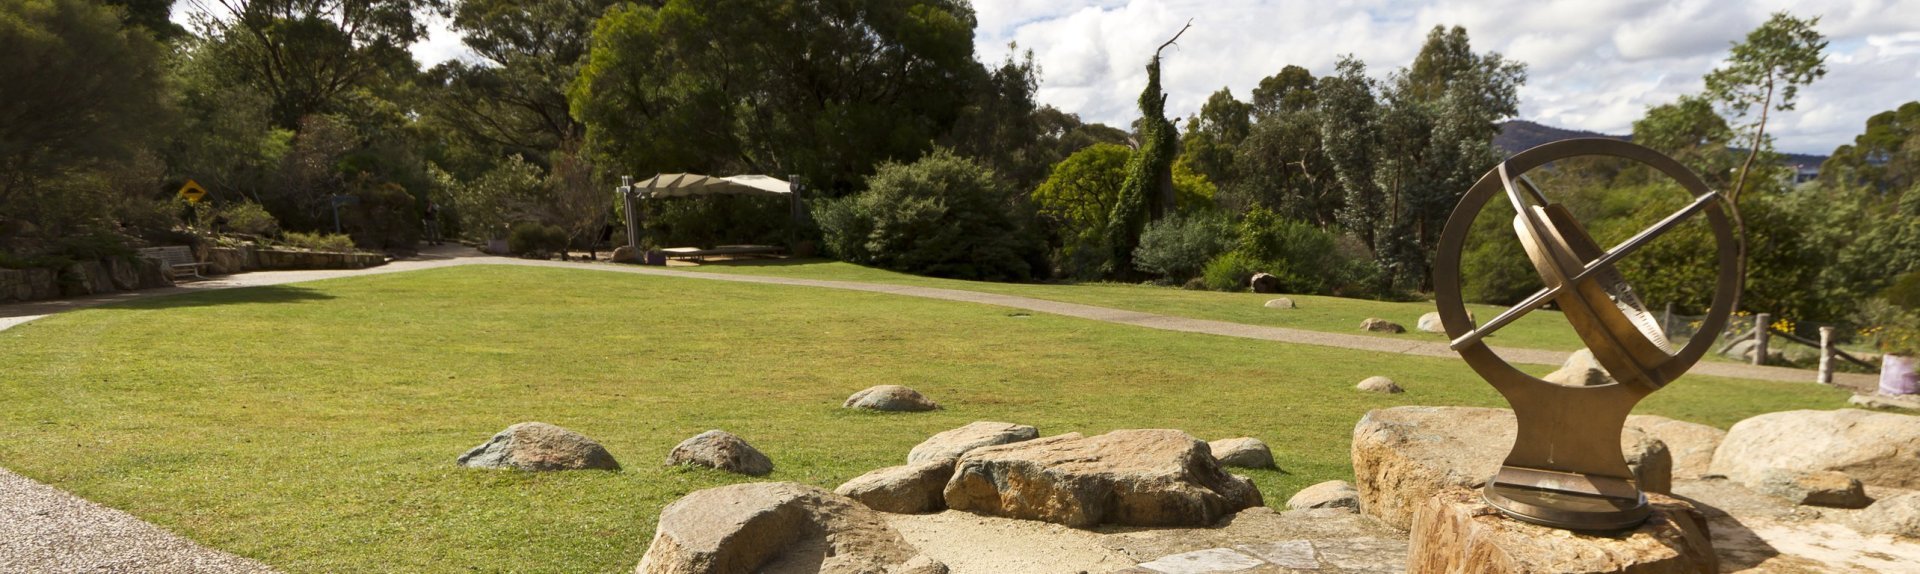 The Rock Garden Lawn and sundial